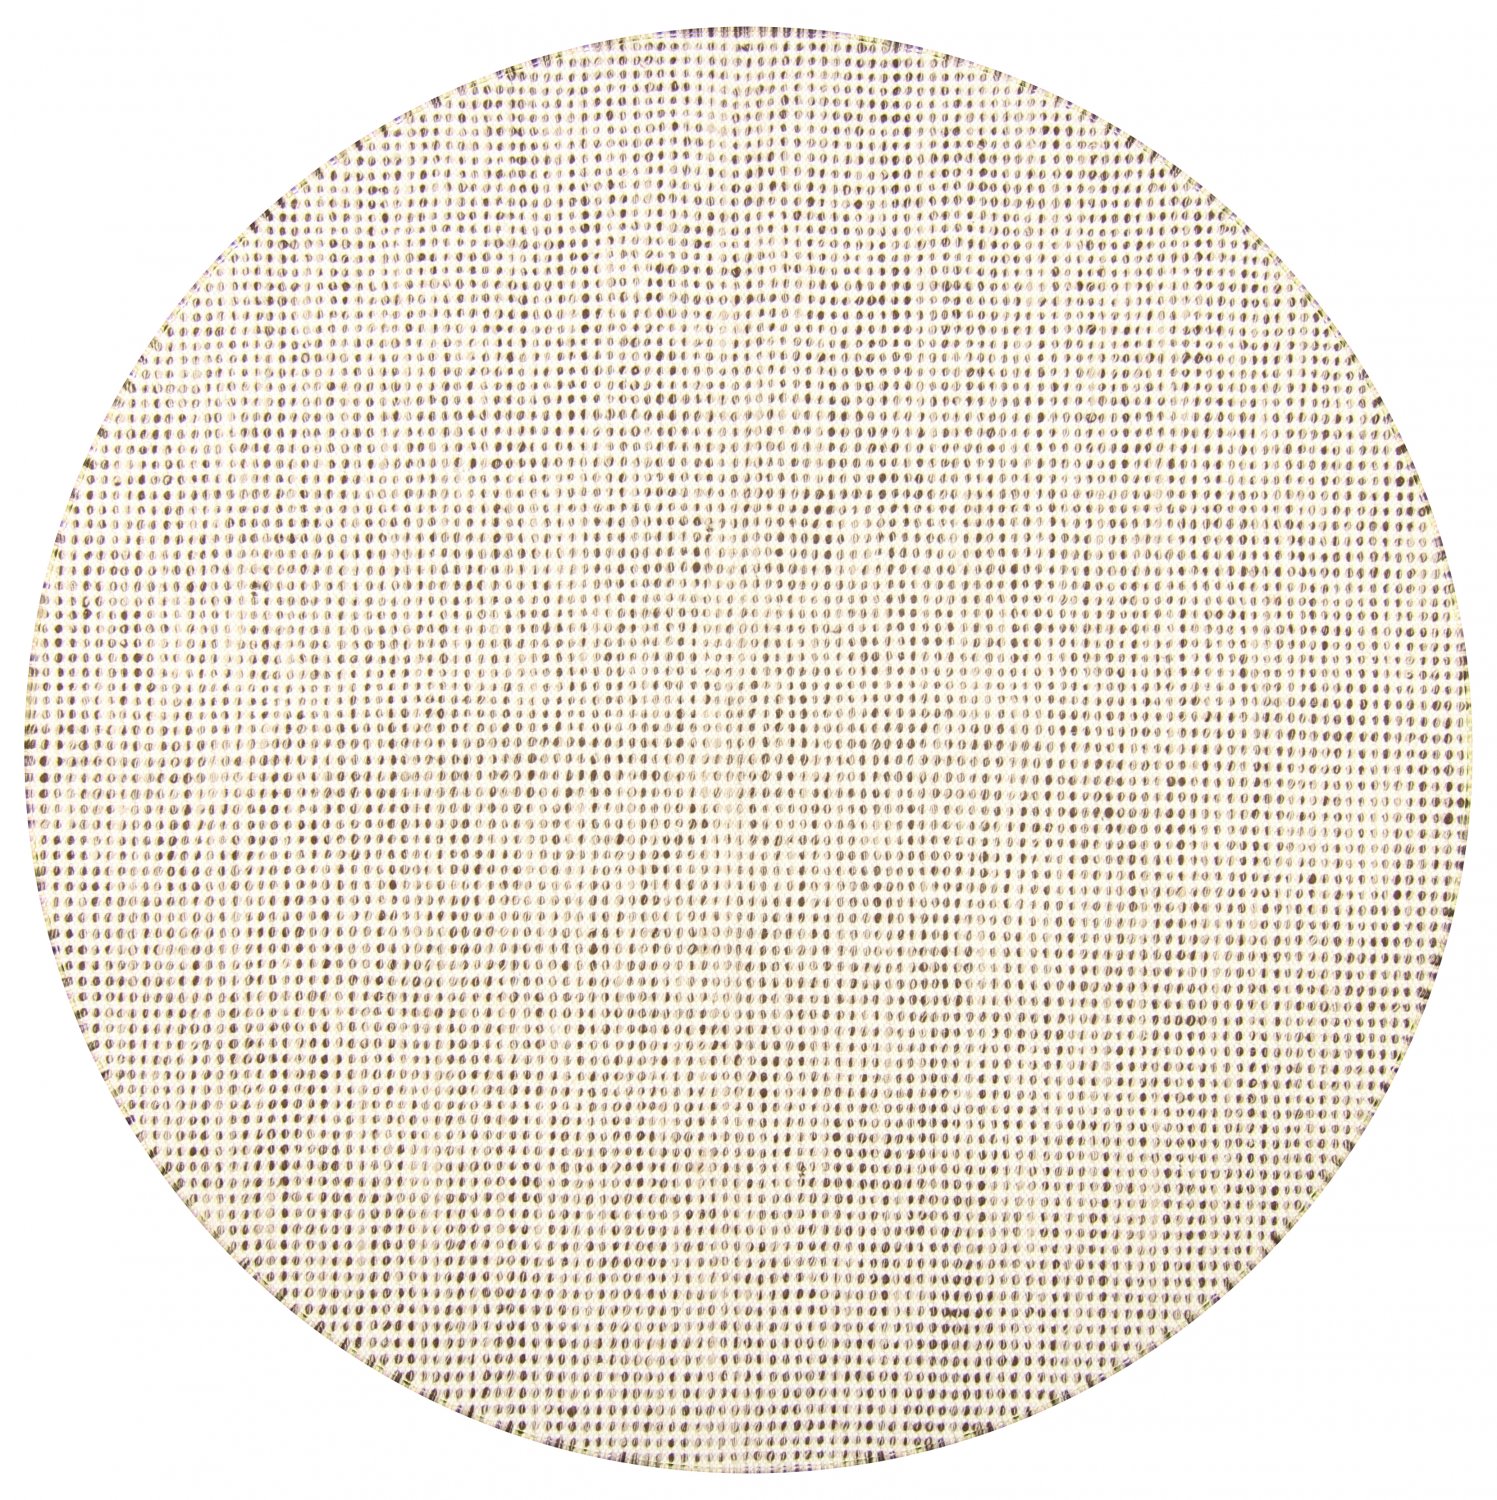 Round rug - Tilba (multi)